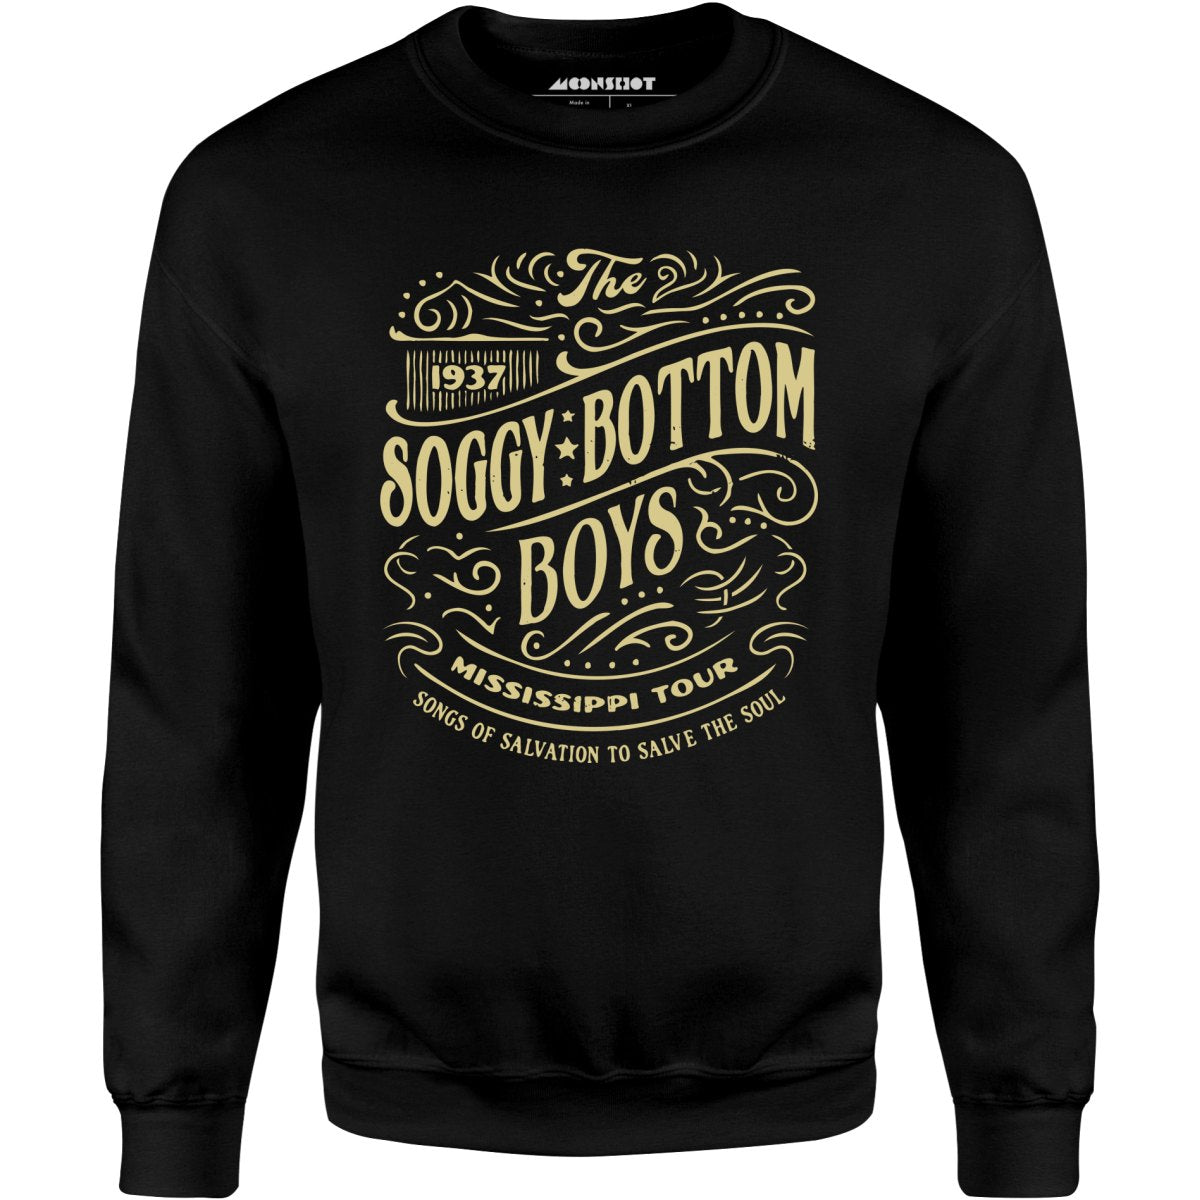 Soggy Bottom Boys - 1937 Mississippi Tour - Unisex Sweatshirt